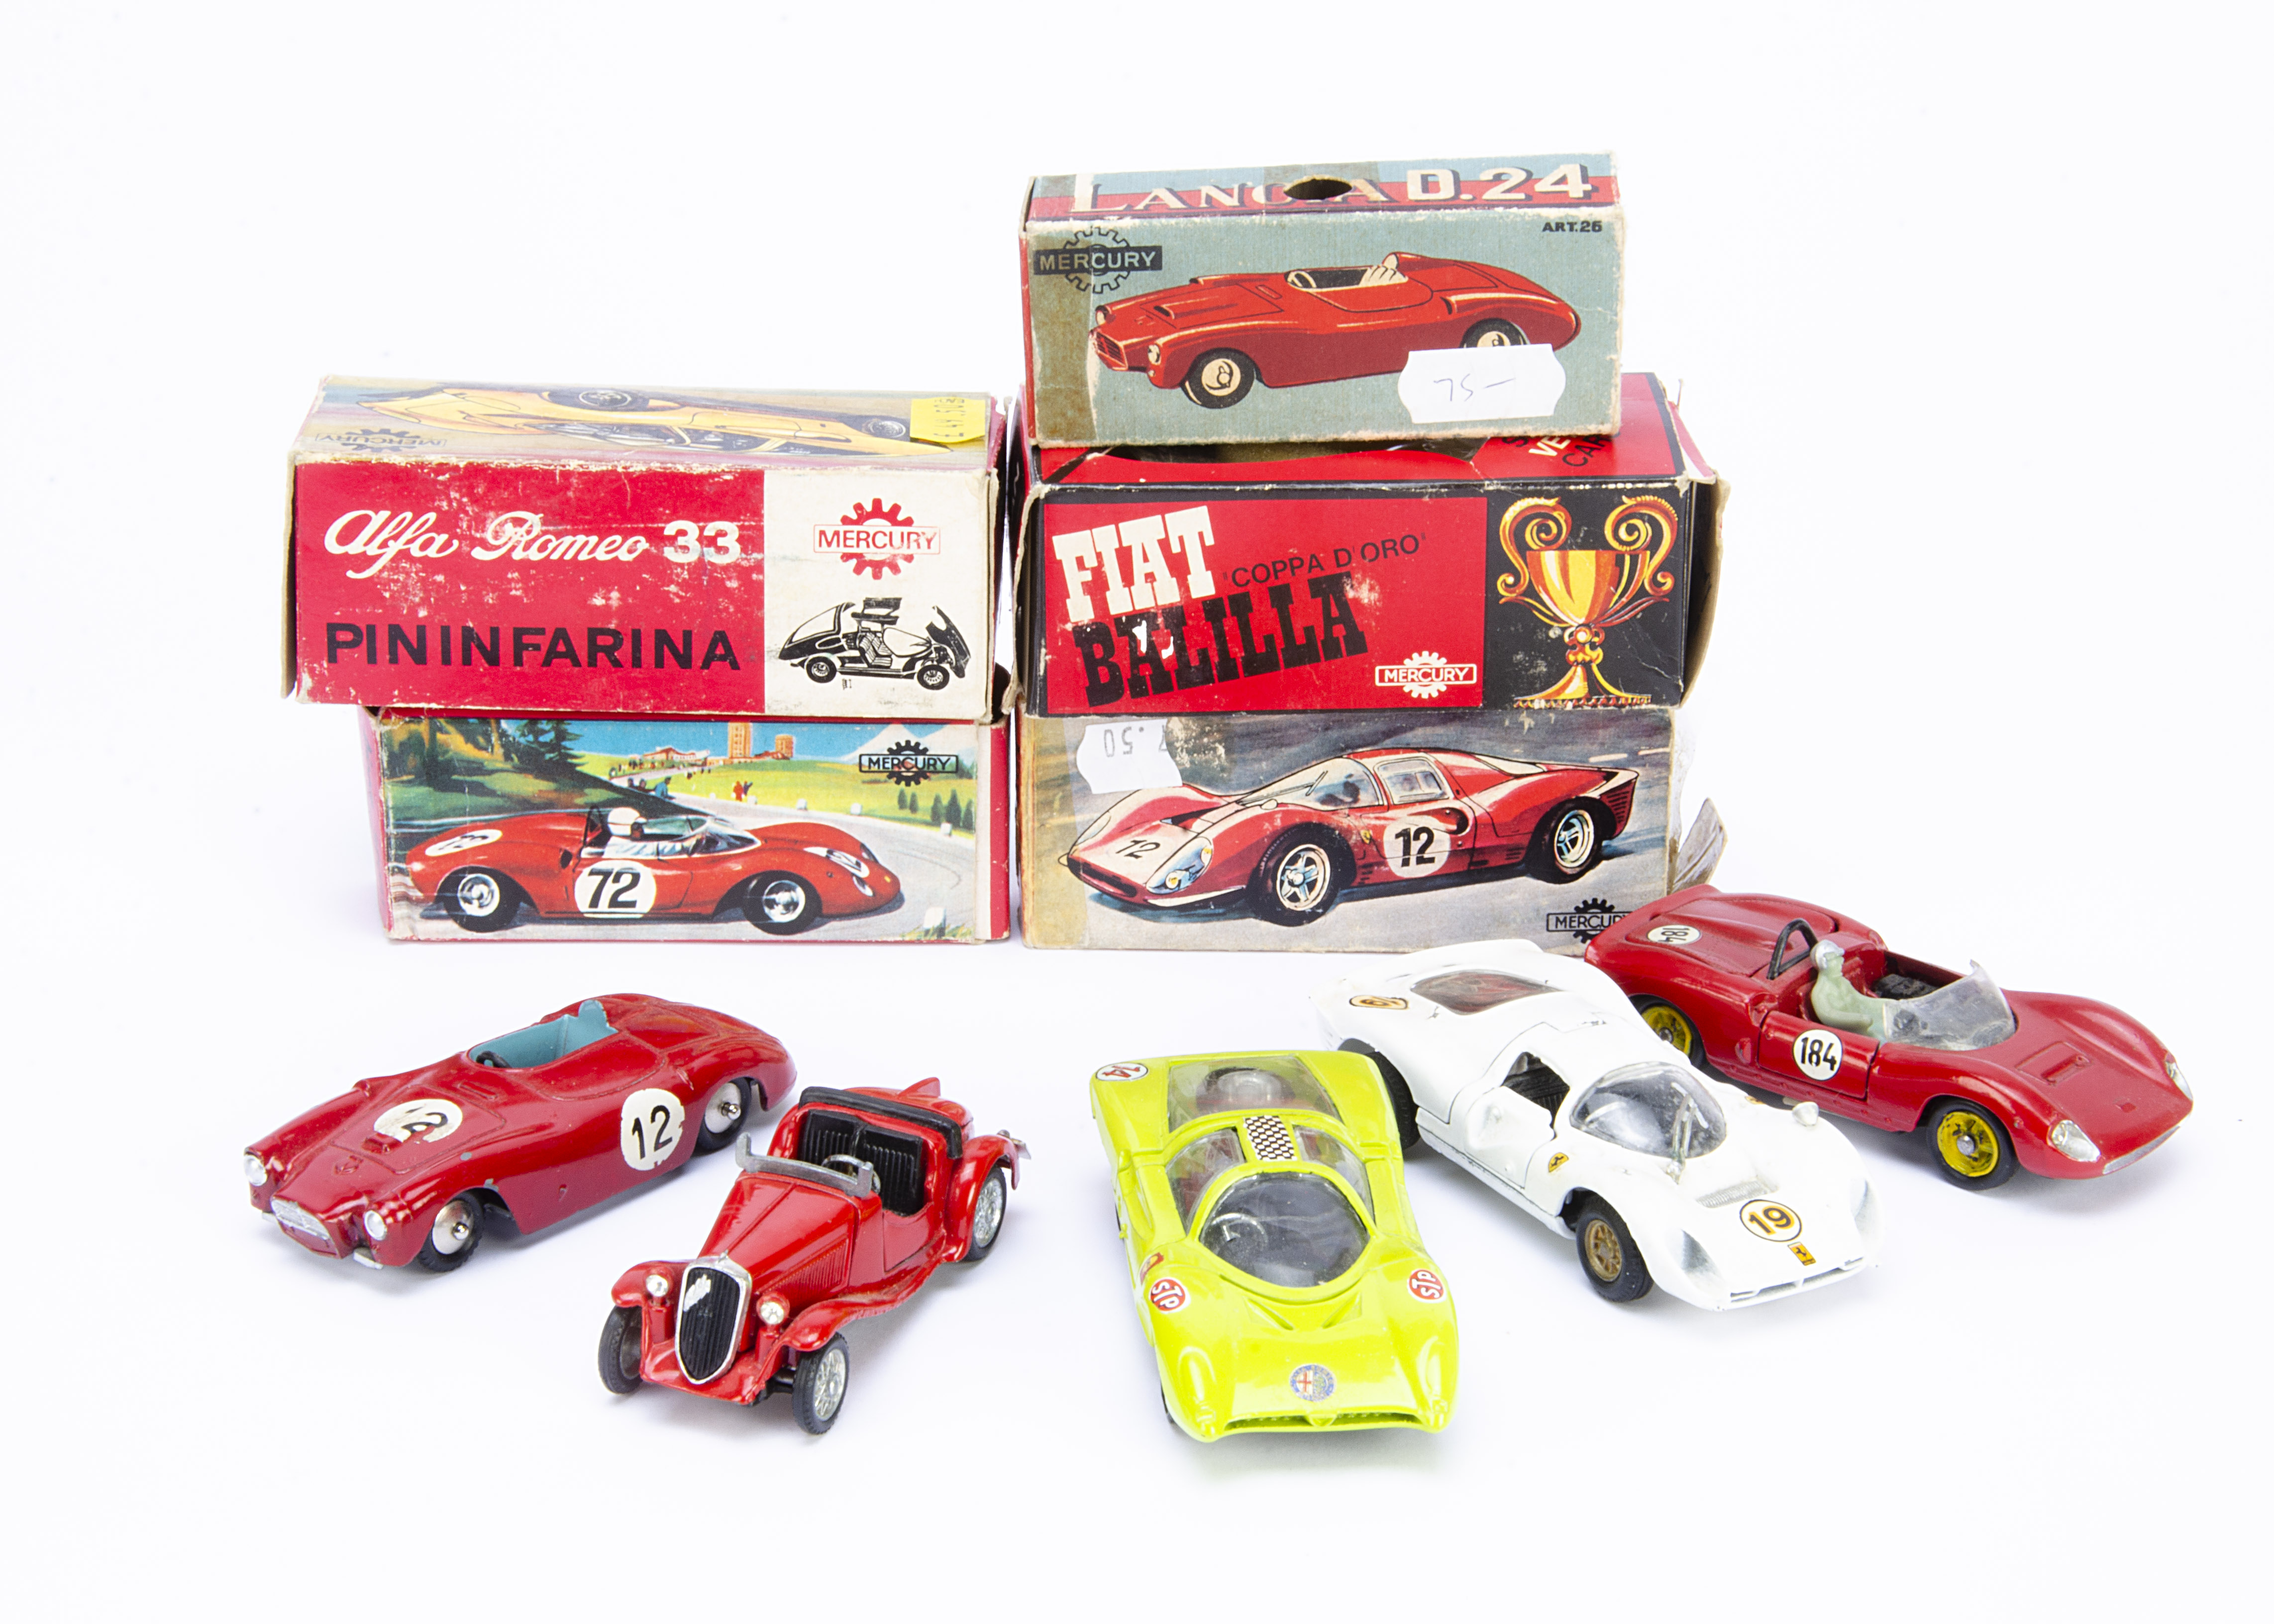 Mercury Competition and Racing Cars, Art 53 Alfa Romeo 33 Pininfarina, Art 45 Dino Sport 206, Art 65